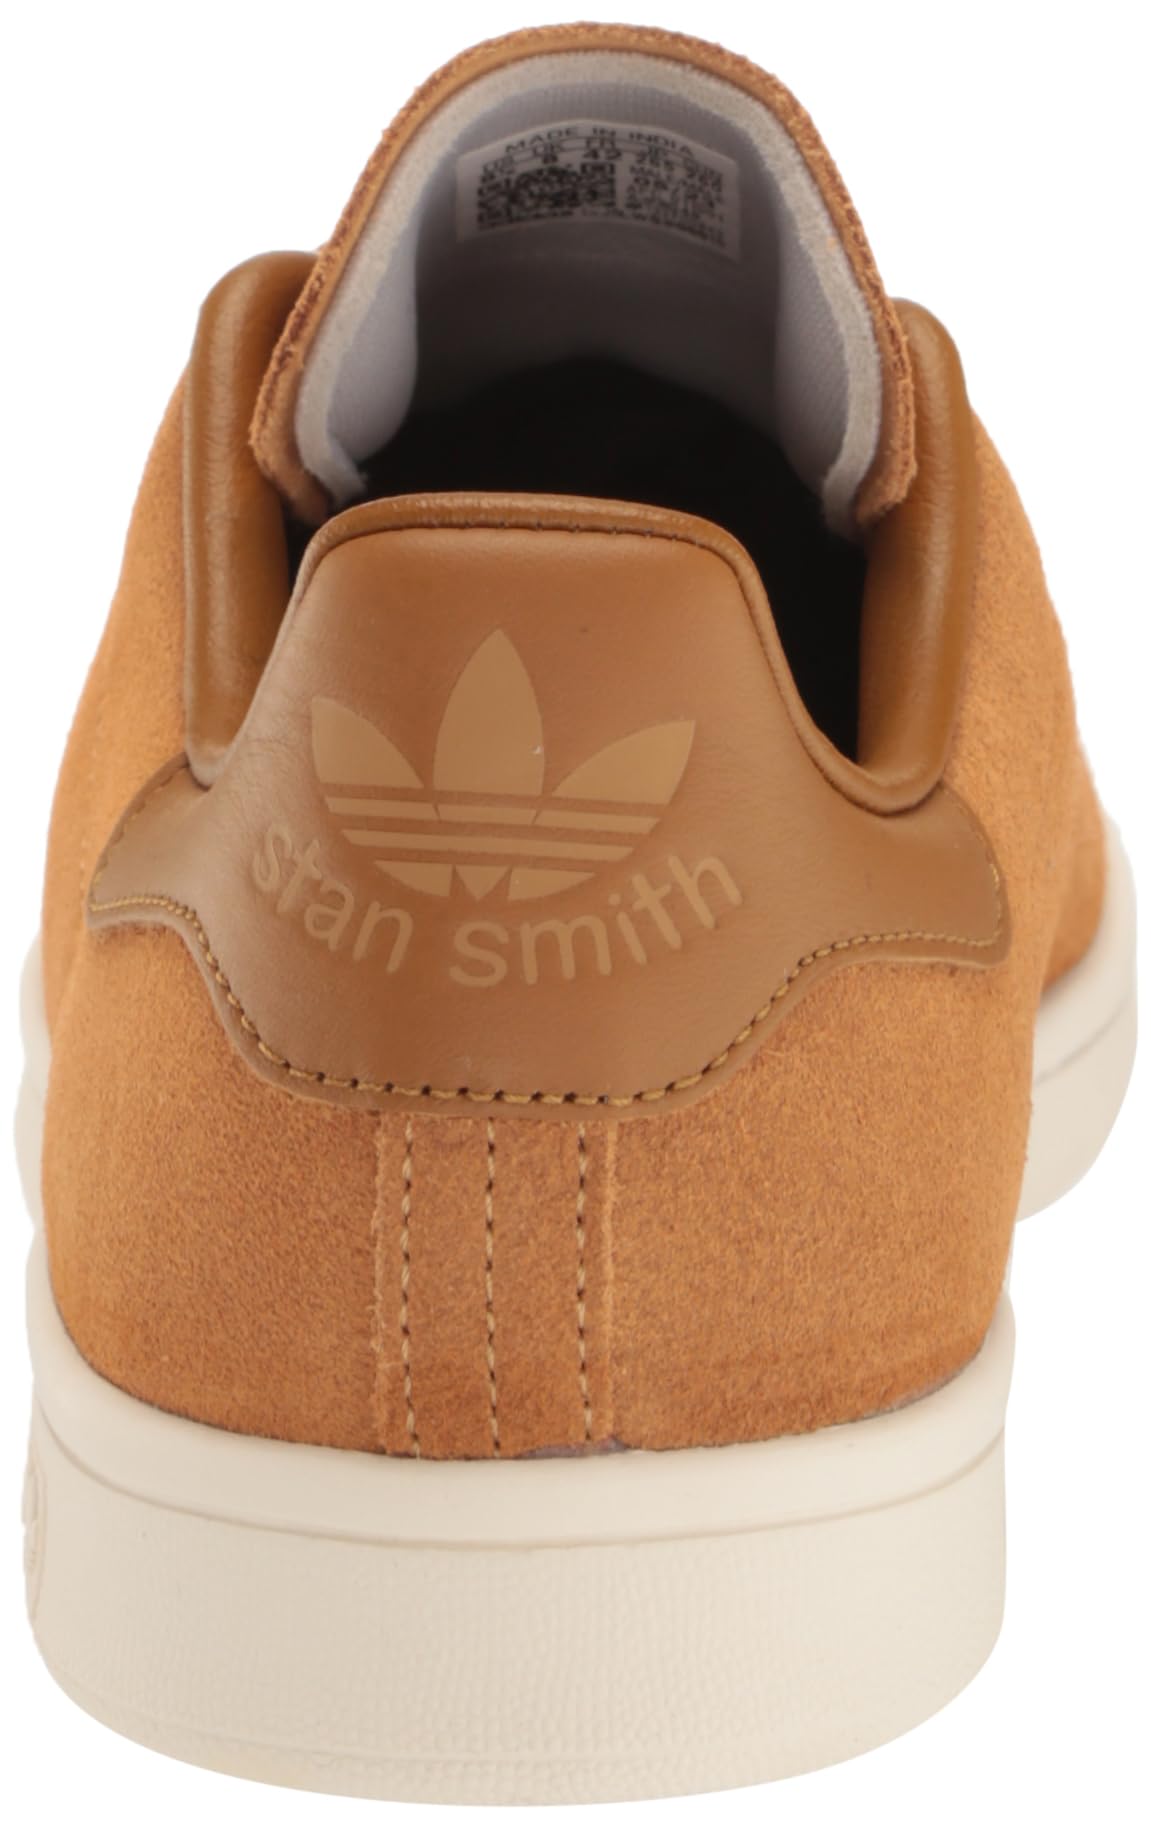 adidas Originals Men's Stan Smith Sneaker, Mesa/Mesa/Bronze Strata, 10